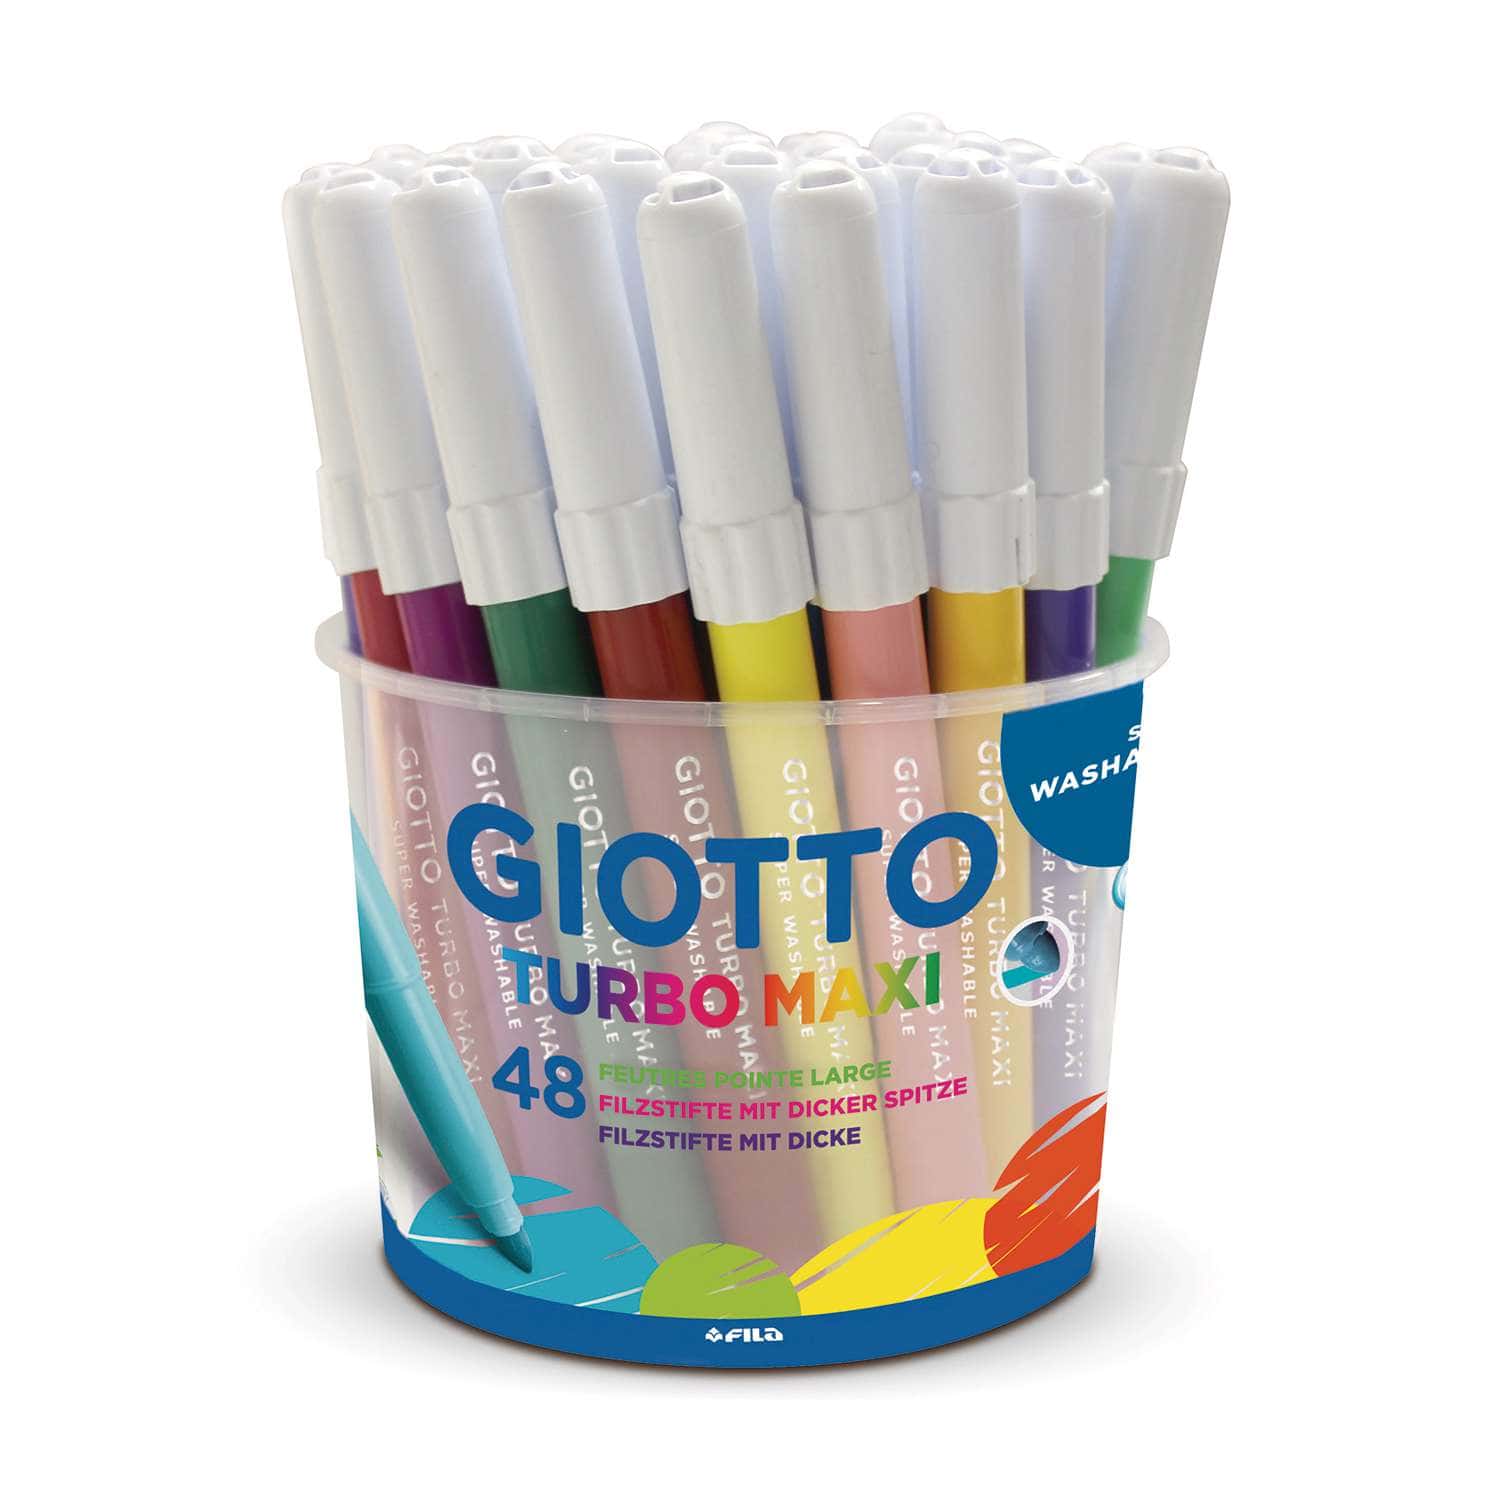 Giotto Turbo Soft Brush Pen 10-set